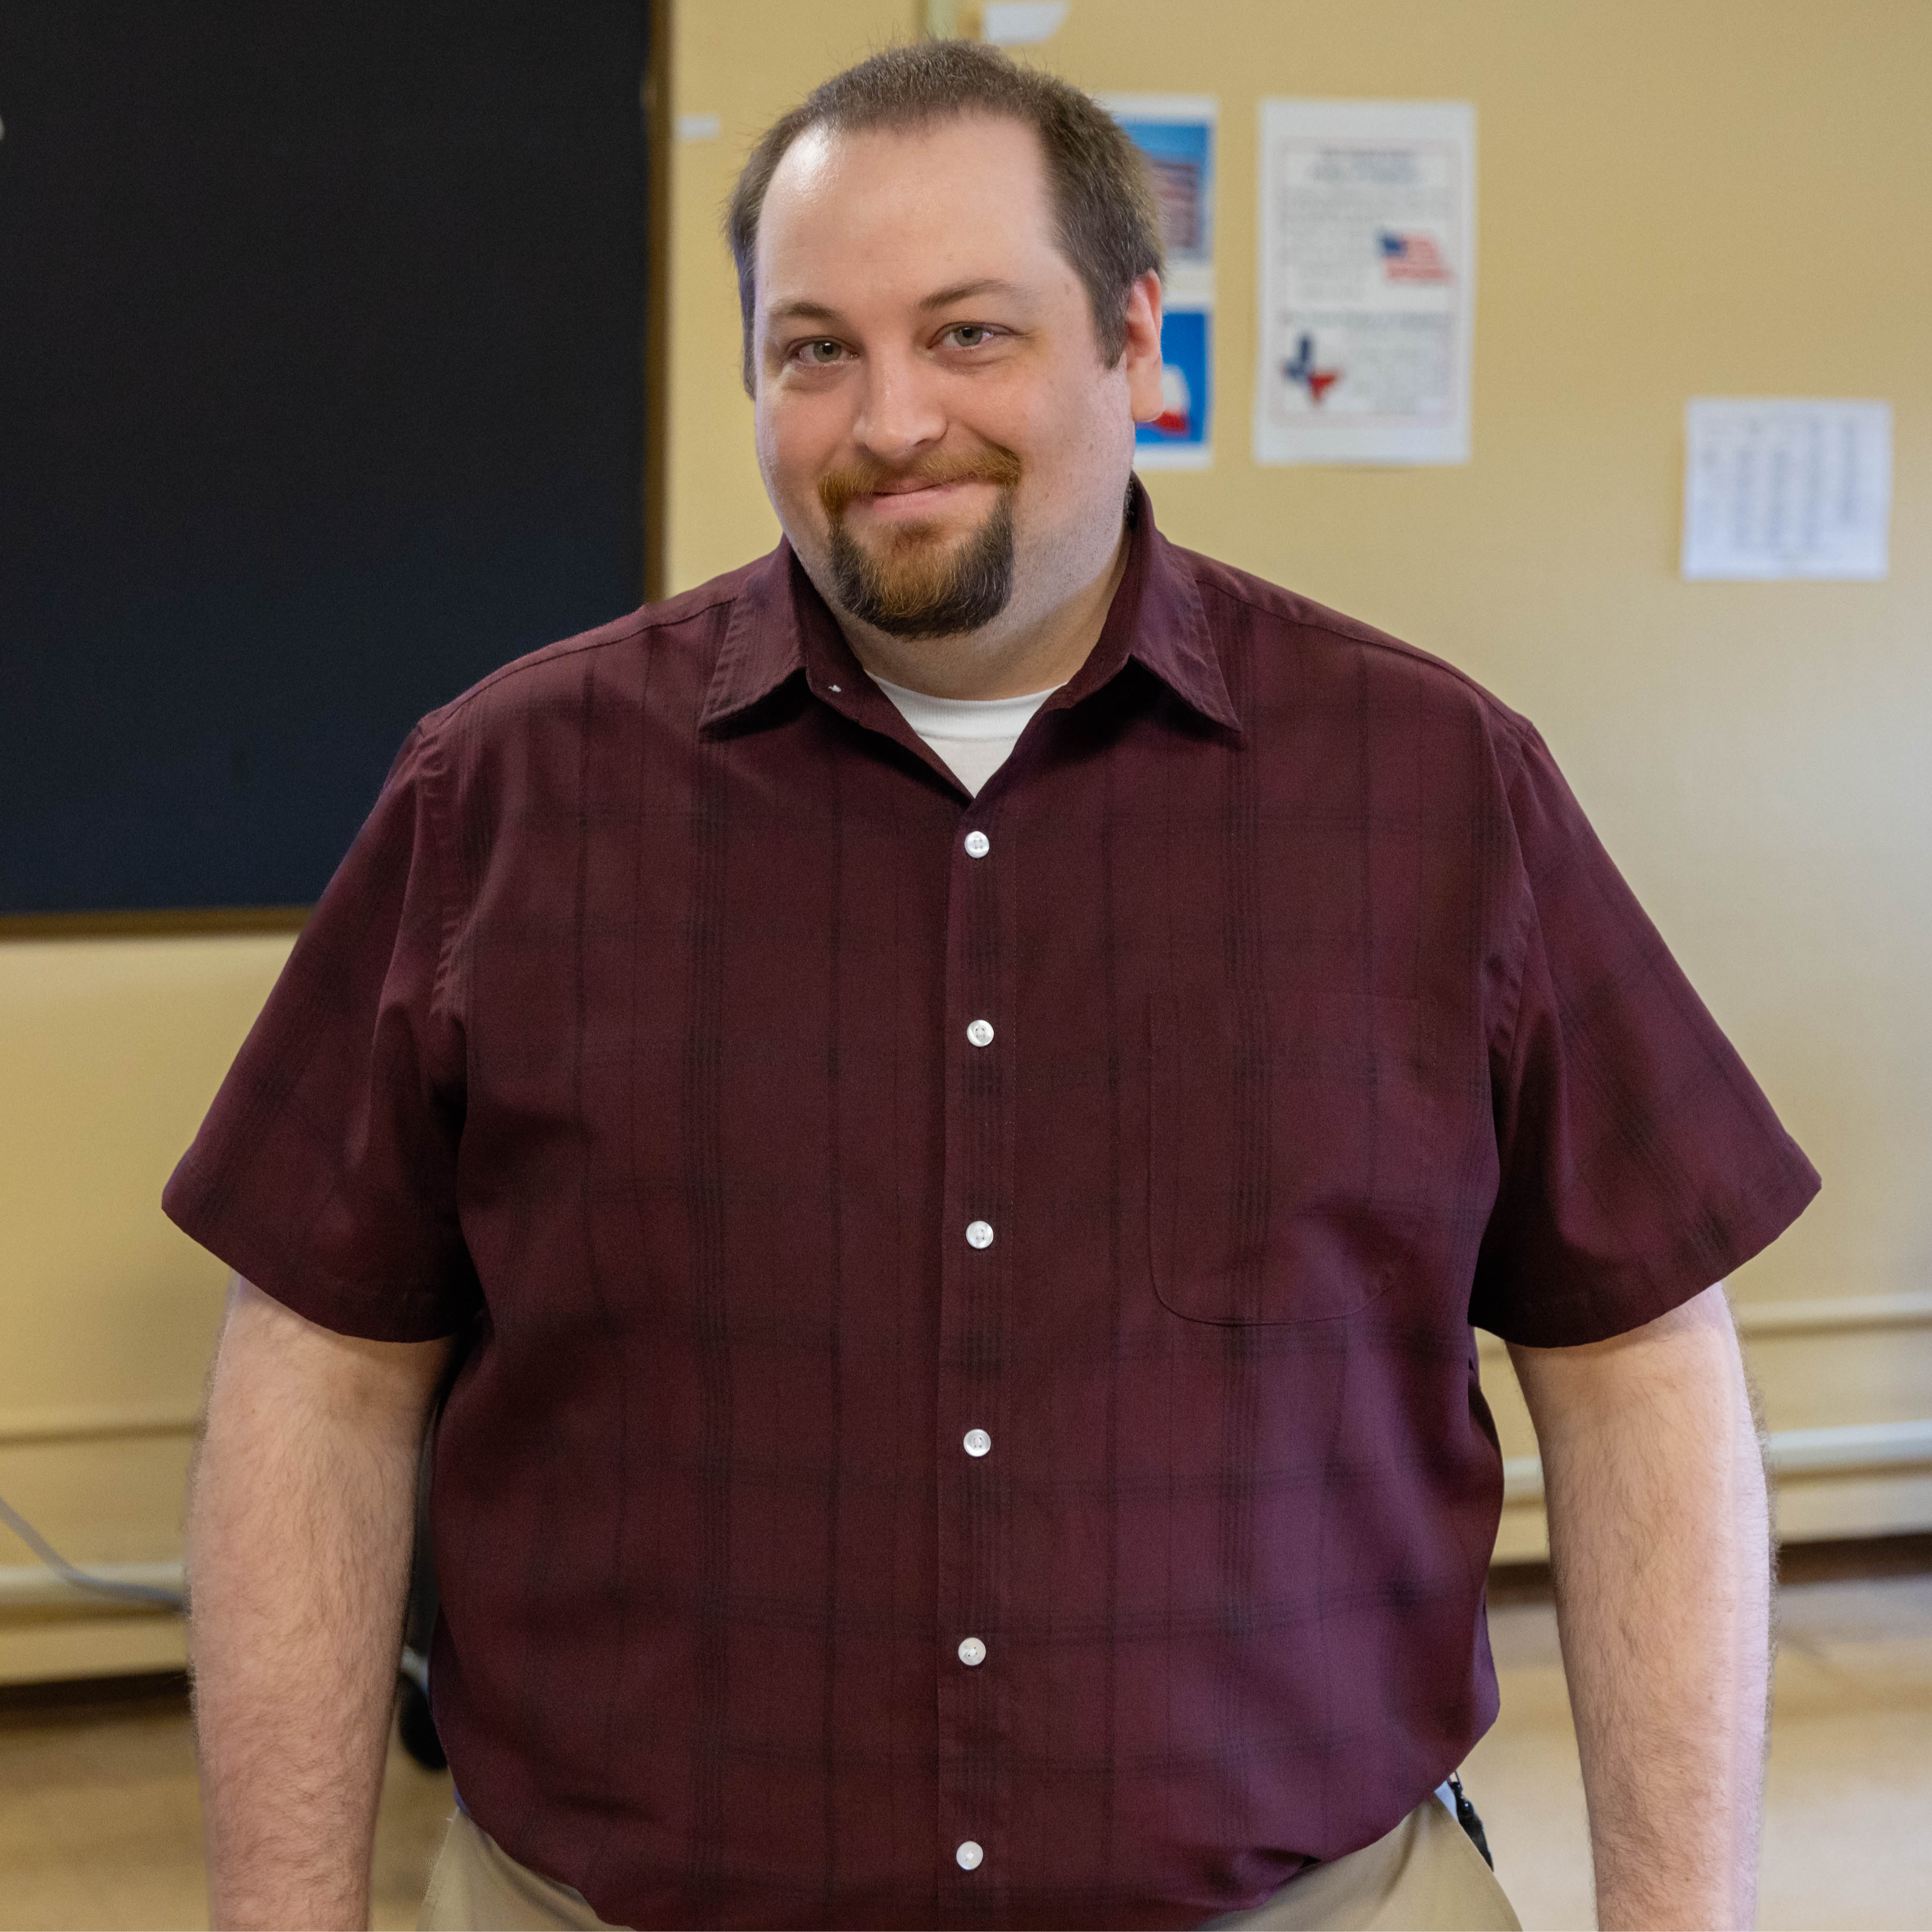 Caucasian man wearing a burgundy shirt standing in a classroom